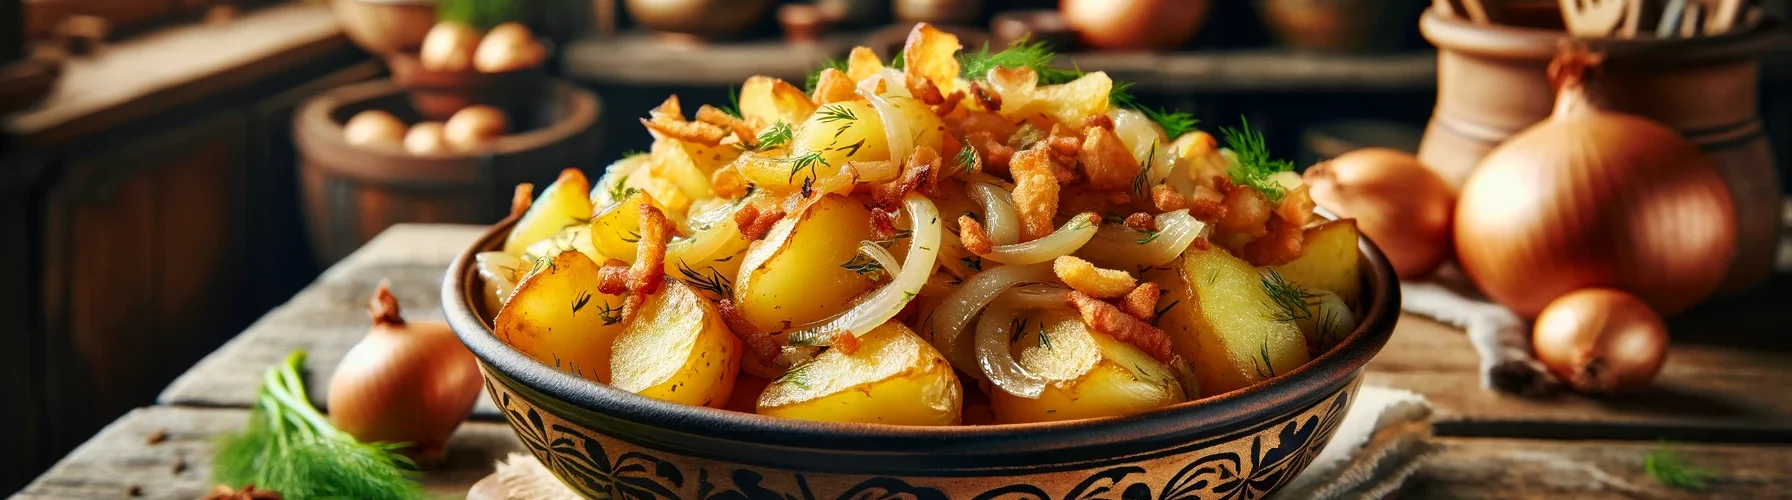 Картошка по-селянски на сковороде: настоящий вкус деревни